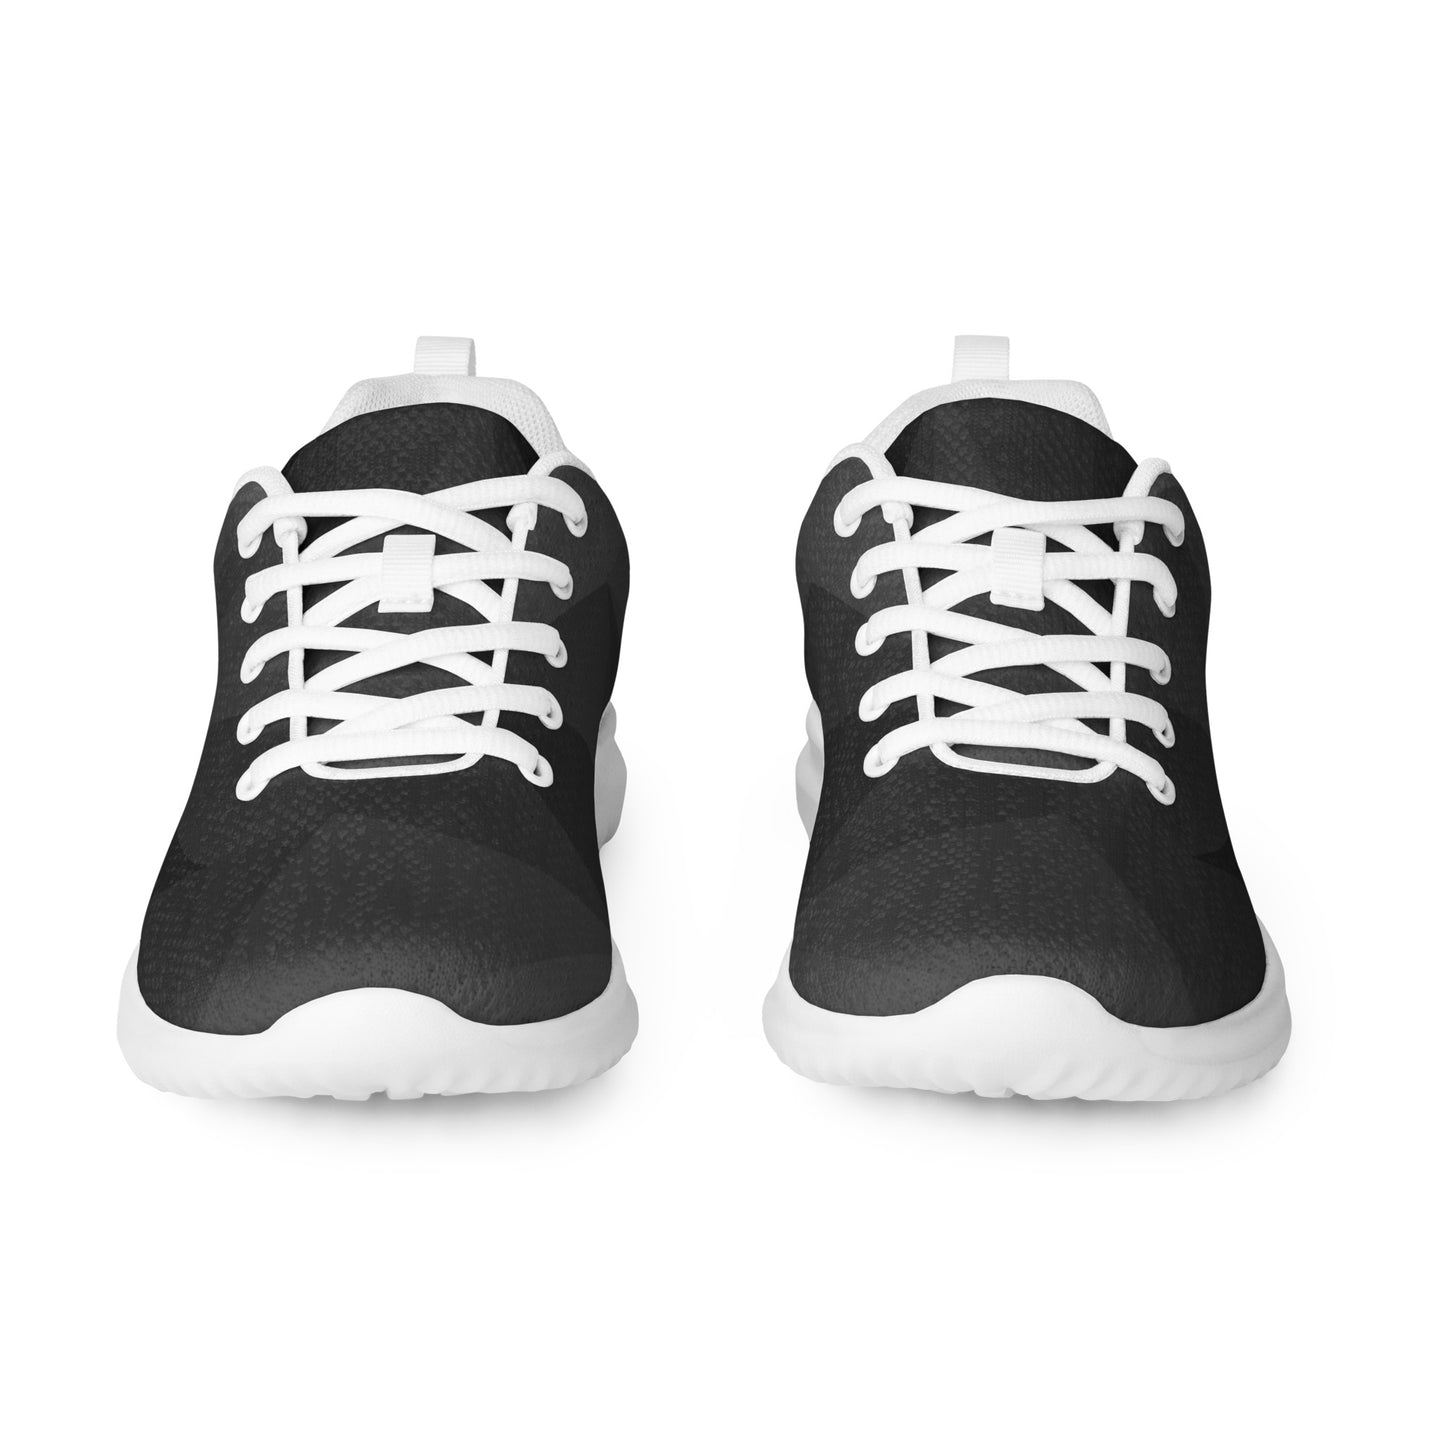 DASH Geo Black Men’s Athletic Shoes Lightweight Breathable Design by IOBI Original Apparel